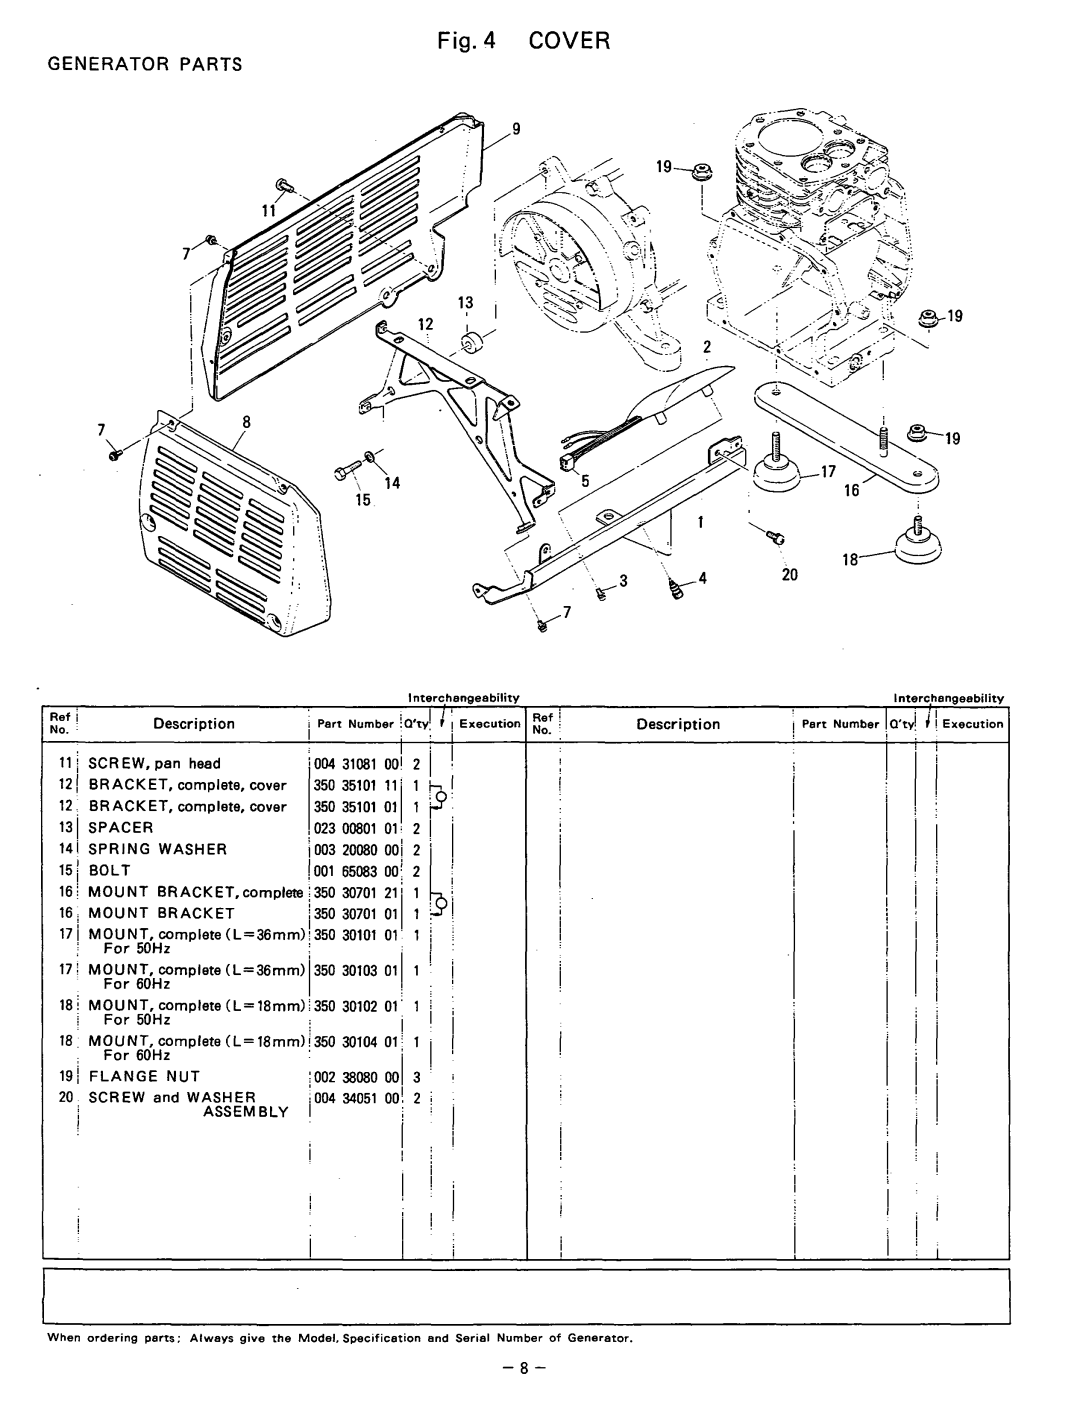 Subaru Robin Power Products R1200 manual Generator Parts, For 50Hz 